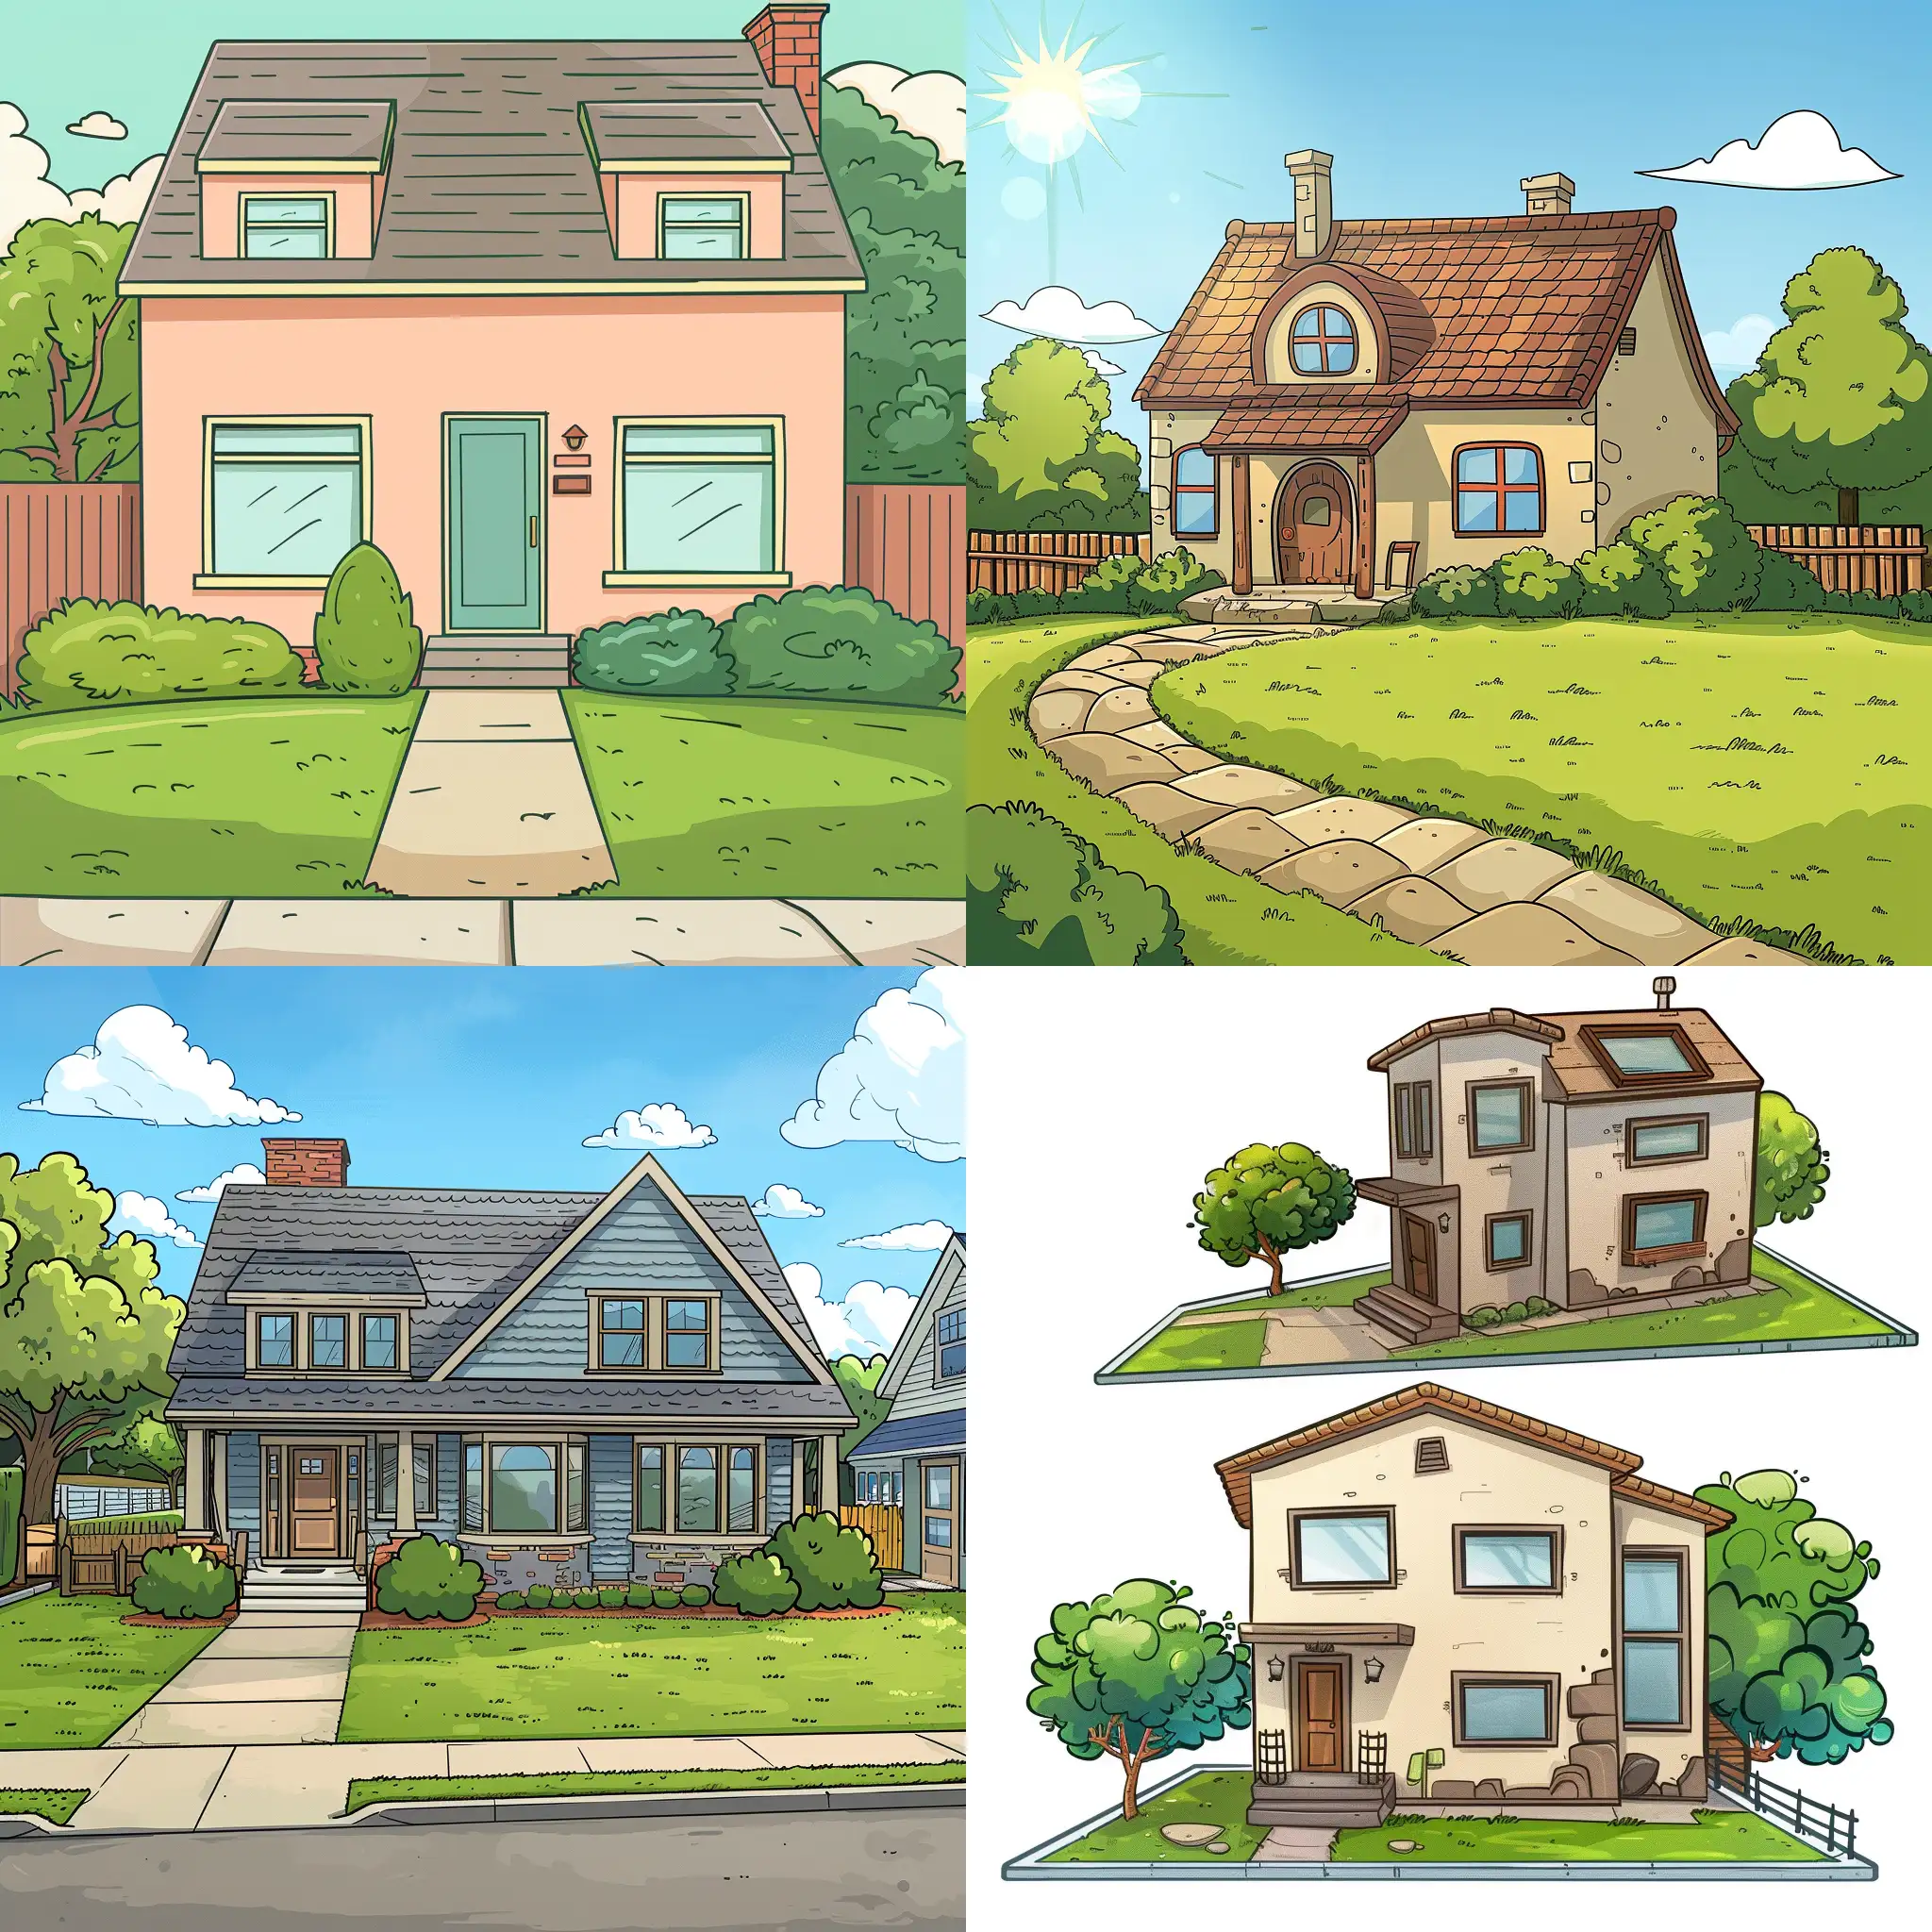 Whimsical-Cartoon-House-with-a-Lush-Lawn